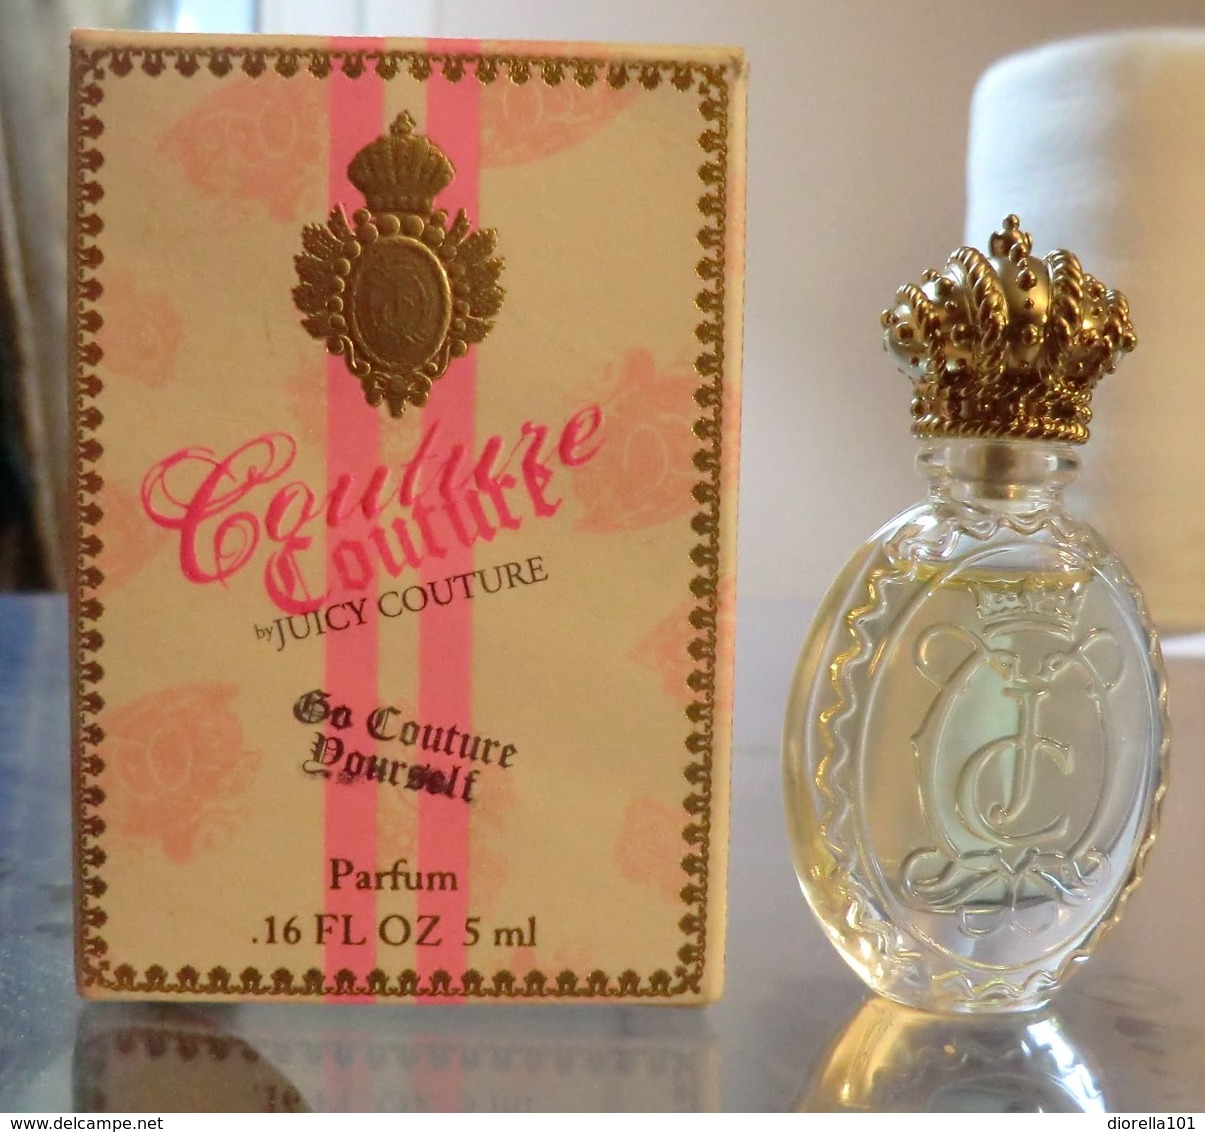 GO COUTURE YOURSELF - PARFUM 5 ML De JUICY COUTURE - Miniatures Womens' Fragrances (in Box)